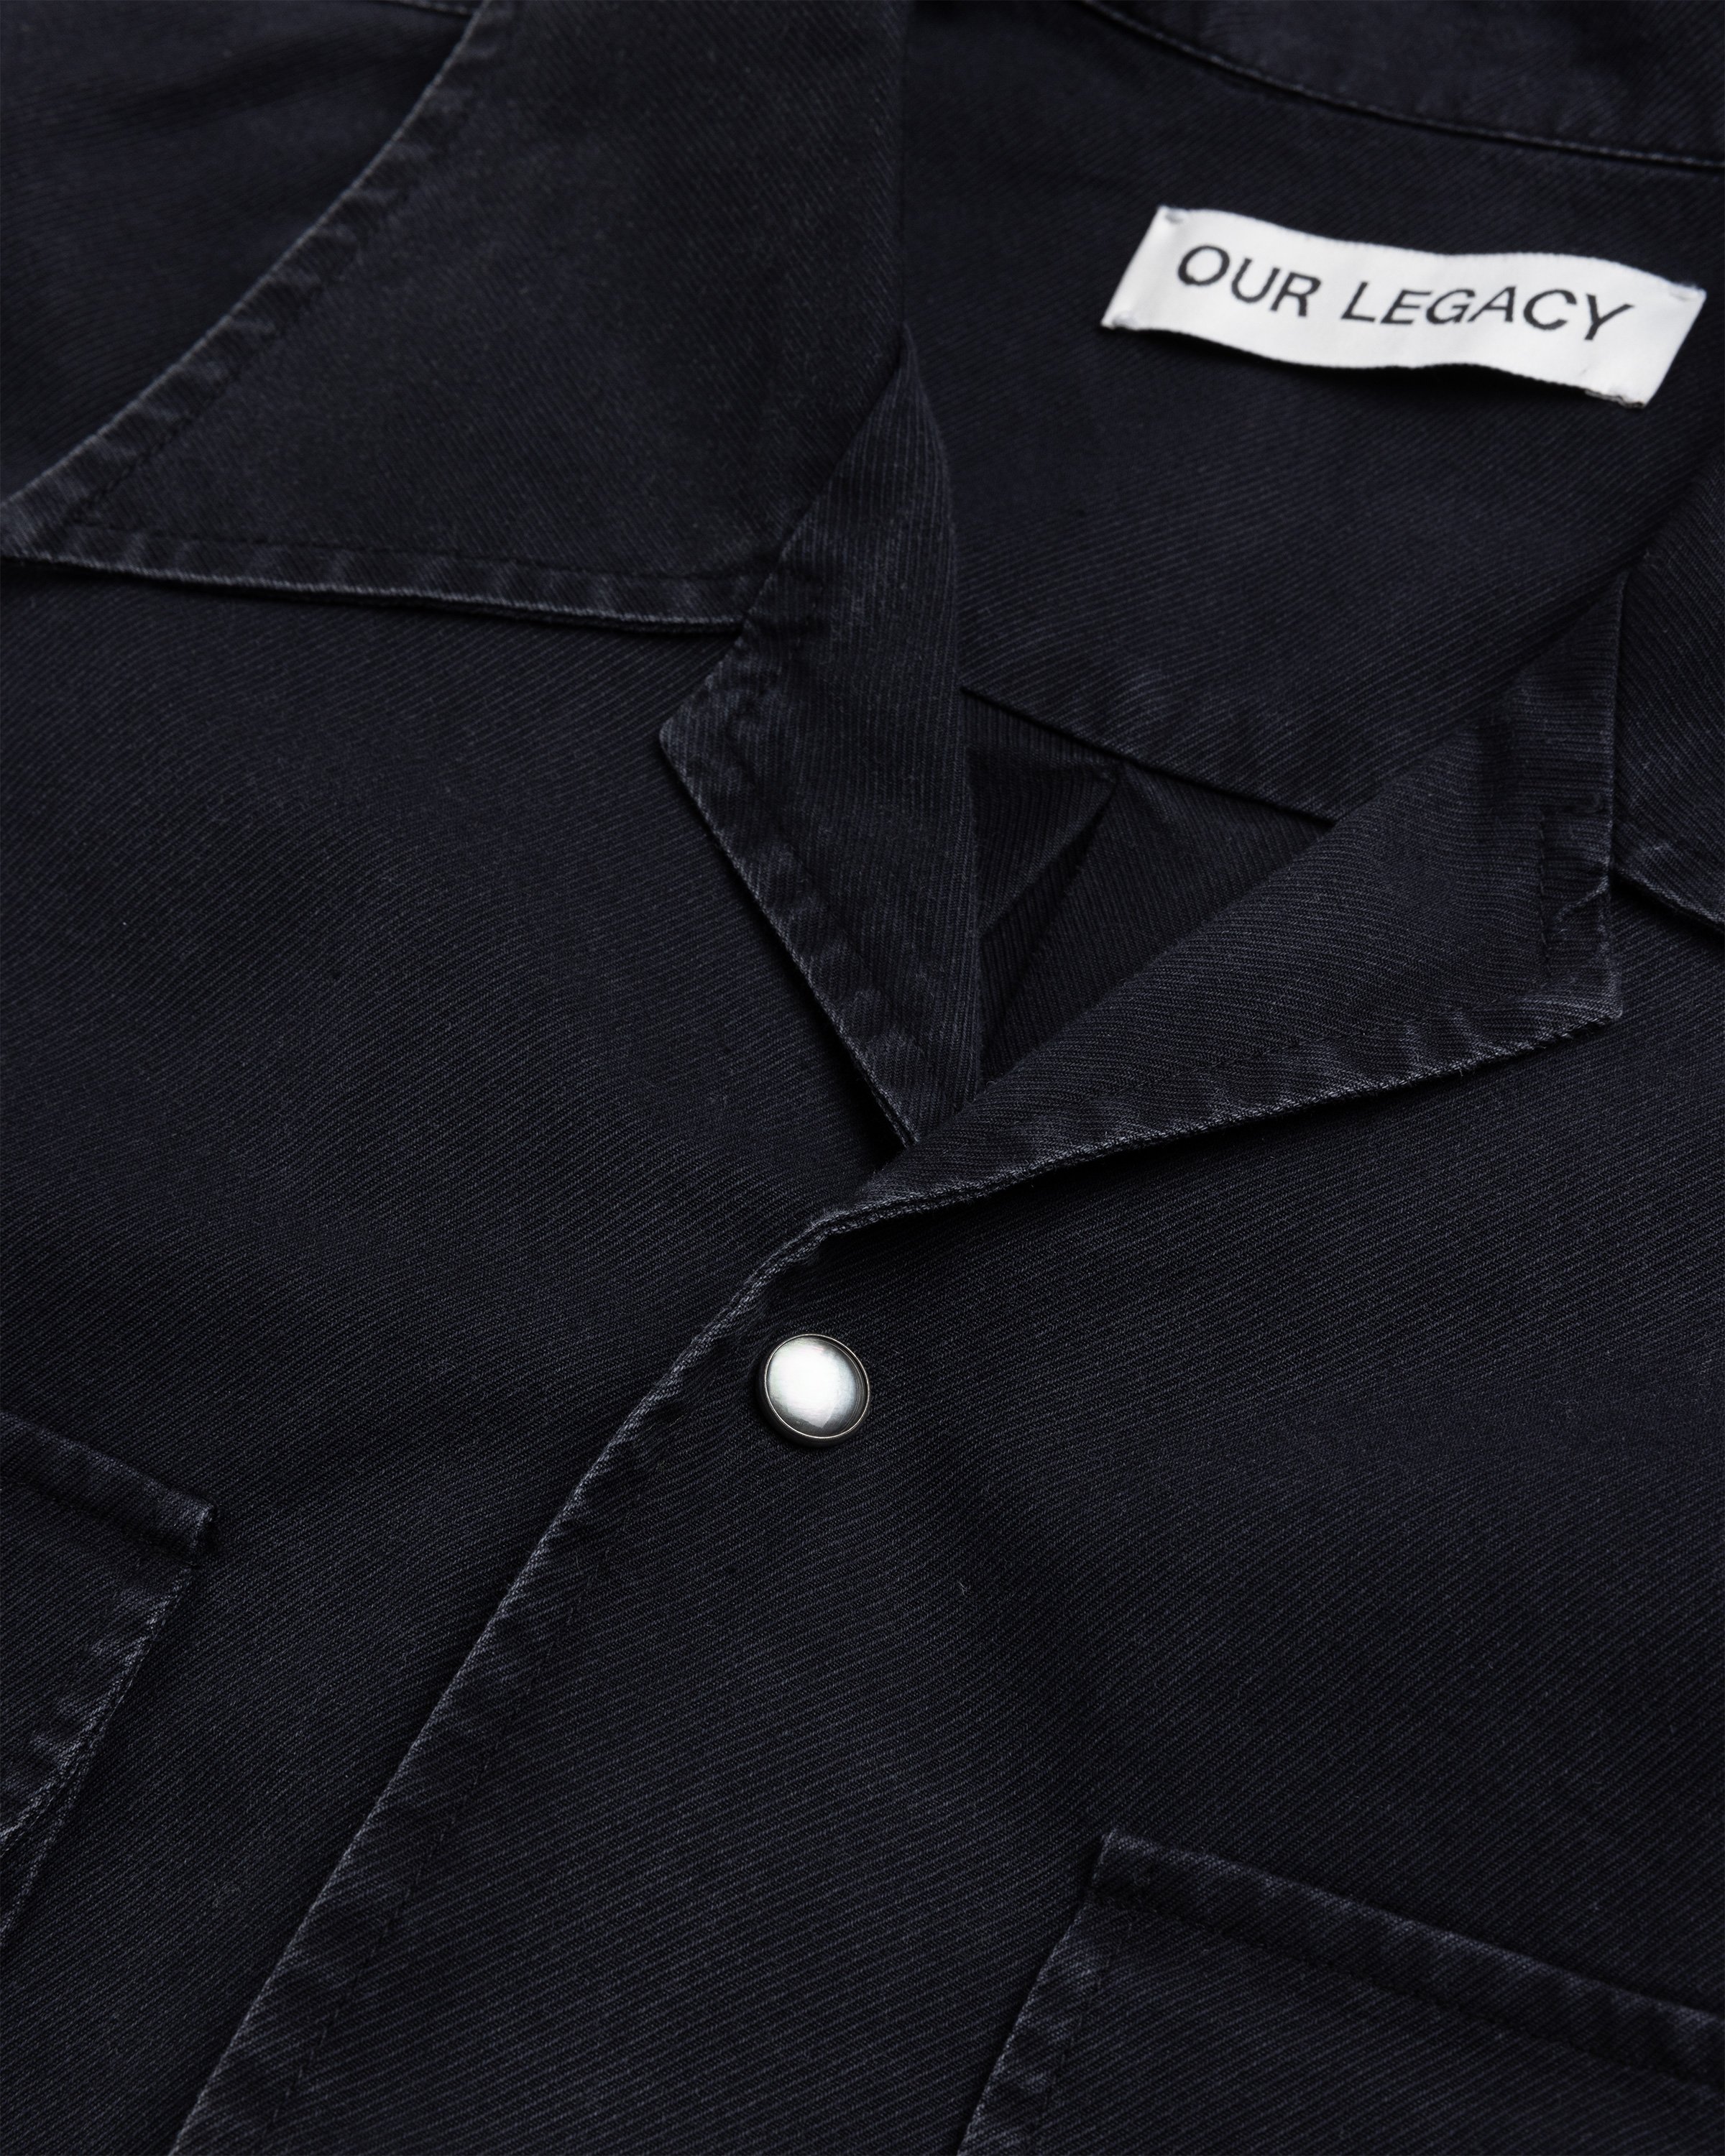 Our Legacy - Poco Shirt Black Cosmic Twill - Clothing - Black - Image 5